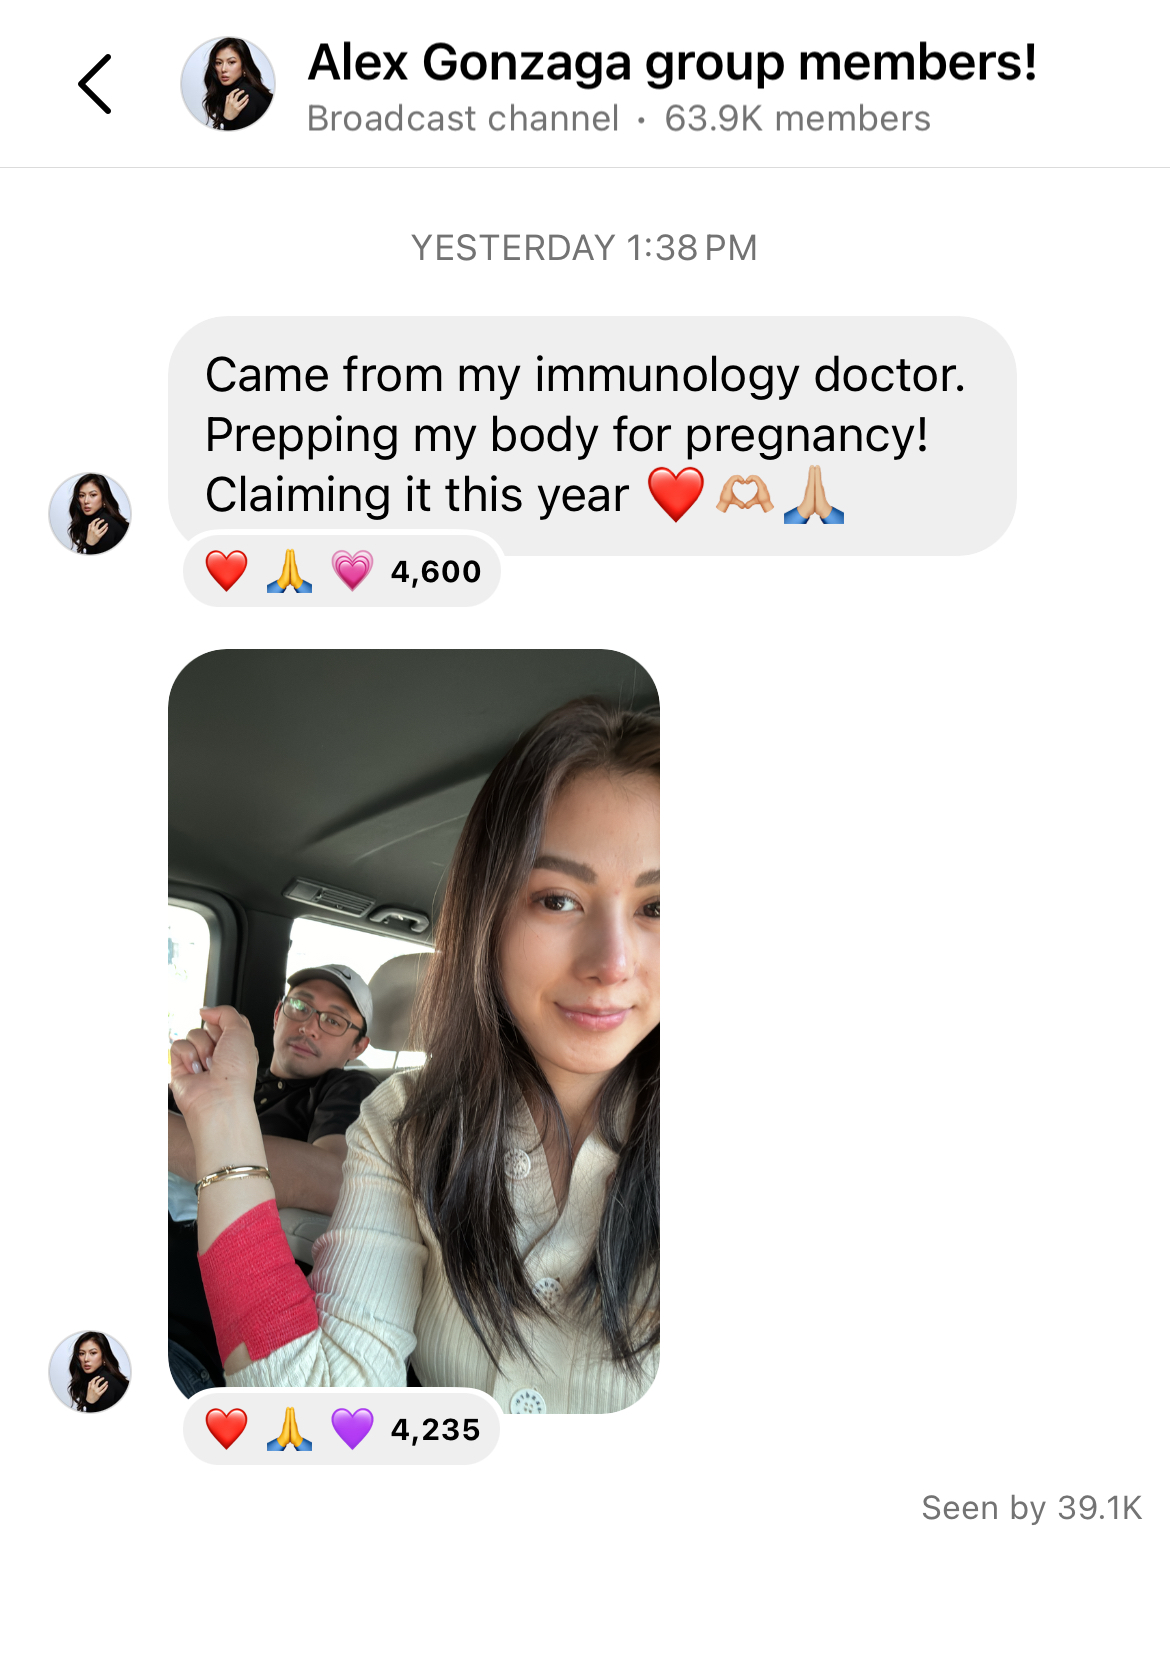 Alex Gonzaga reveals preparing body for pregnancy this year